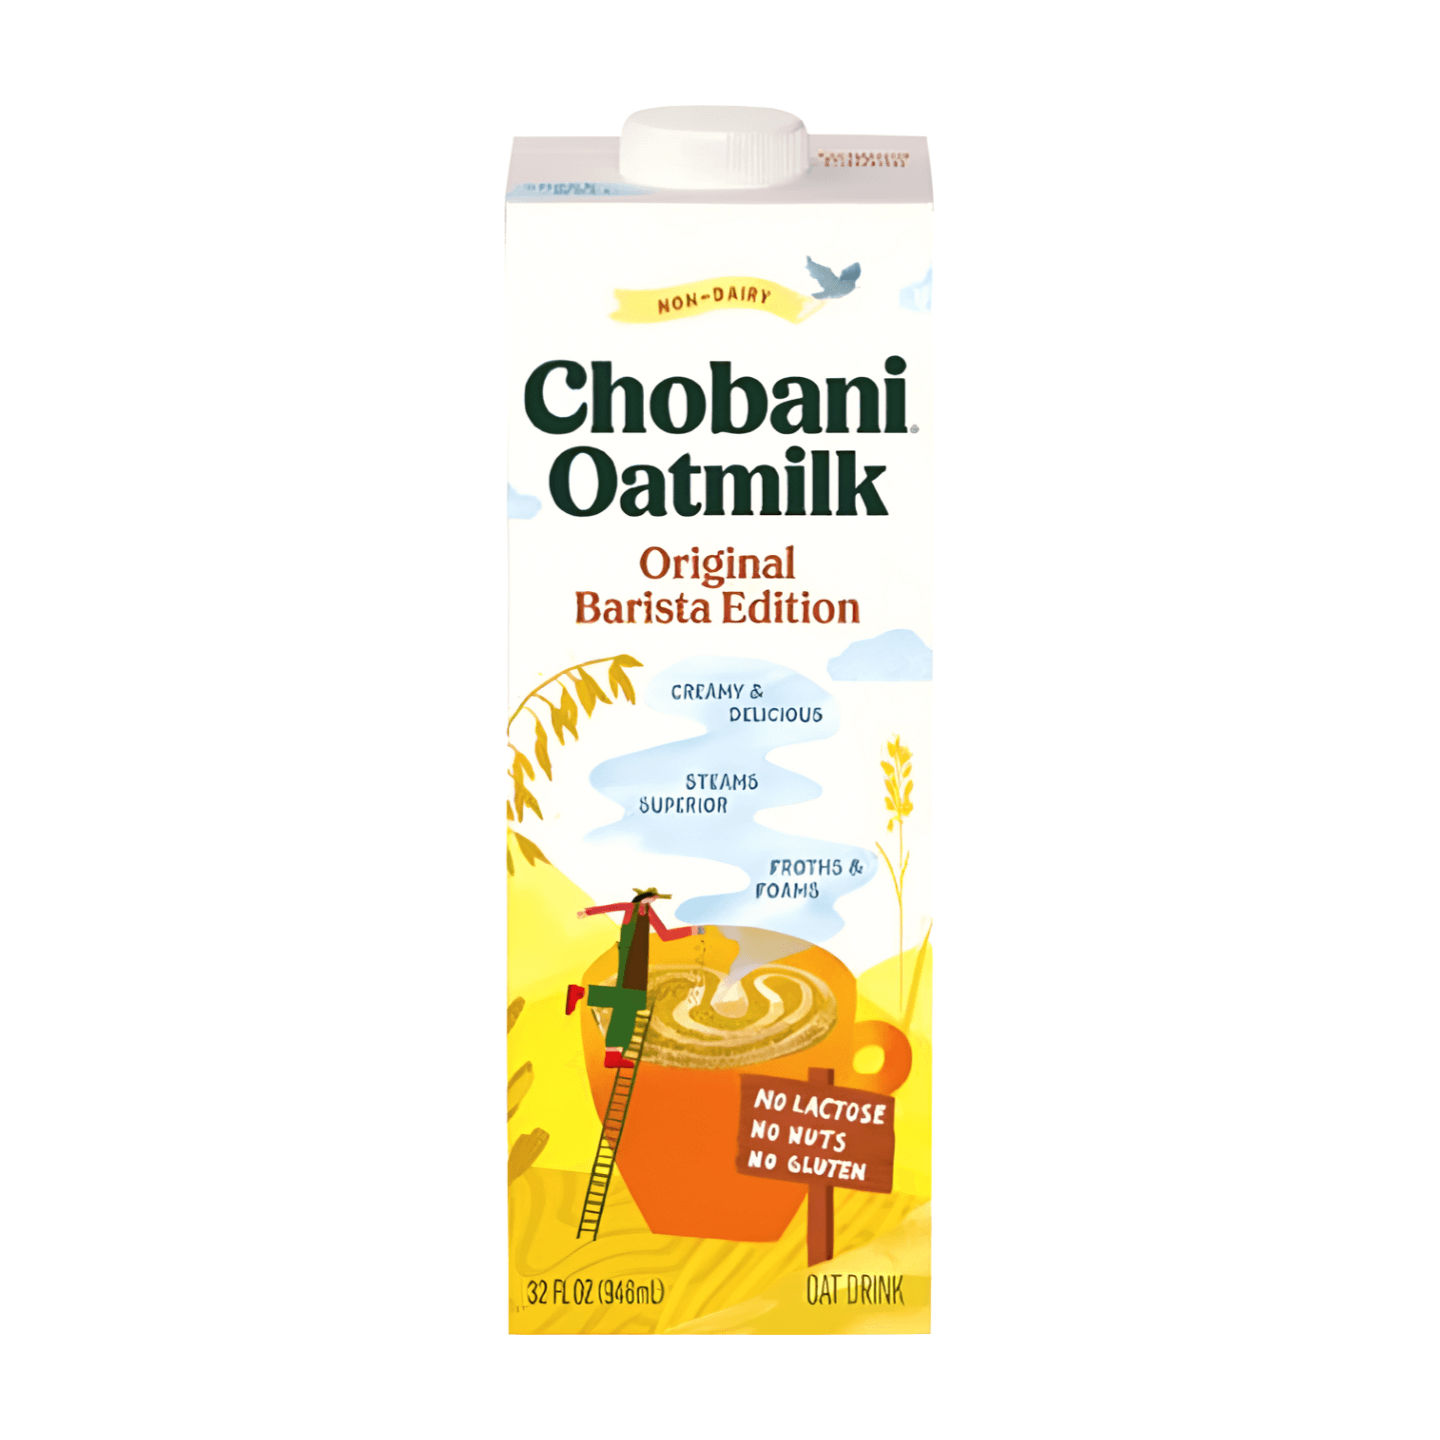 Chobani Oatmilk Original Barista Edition